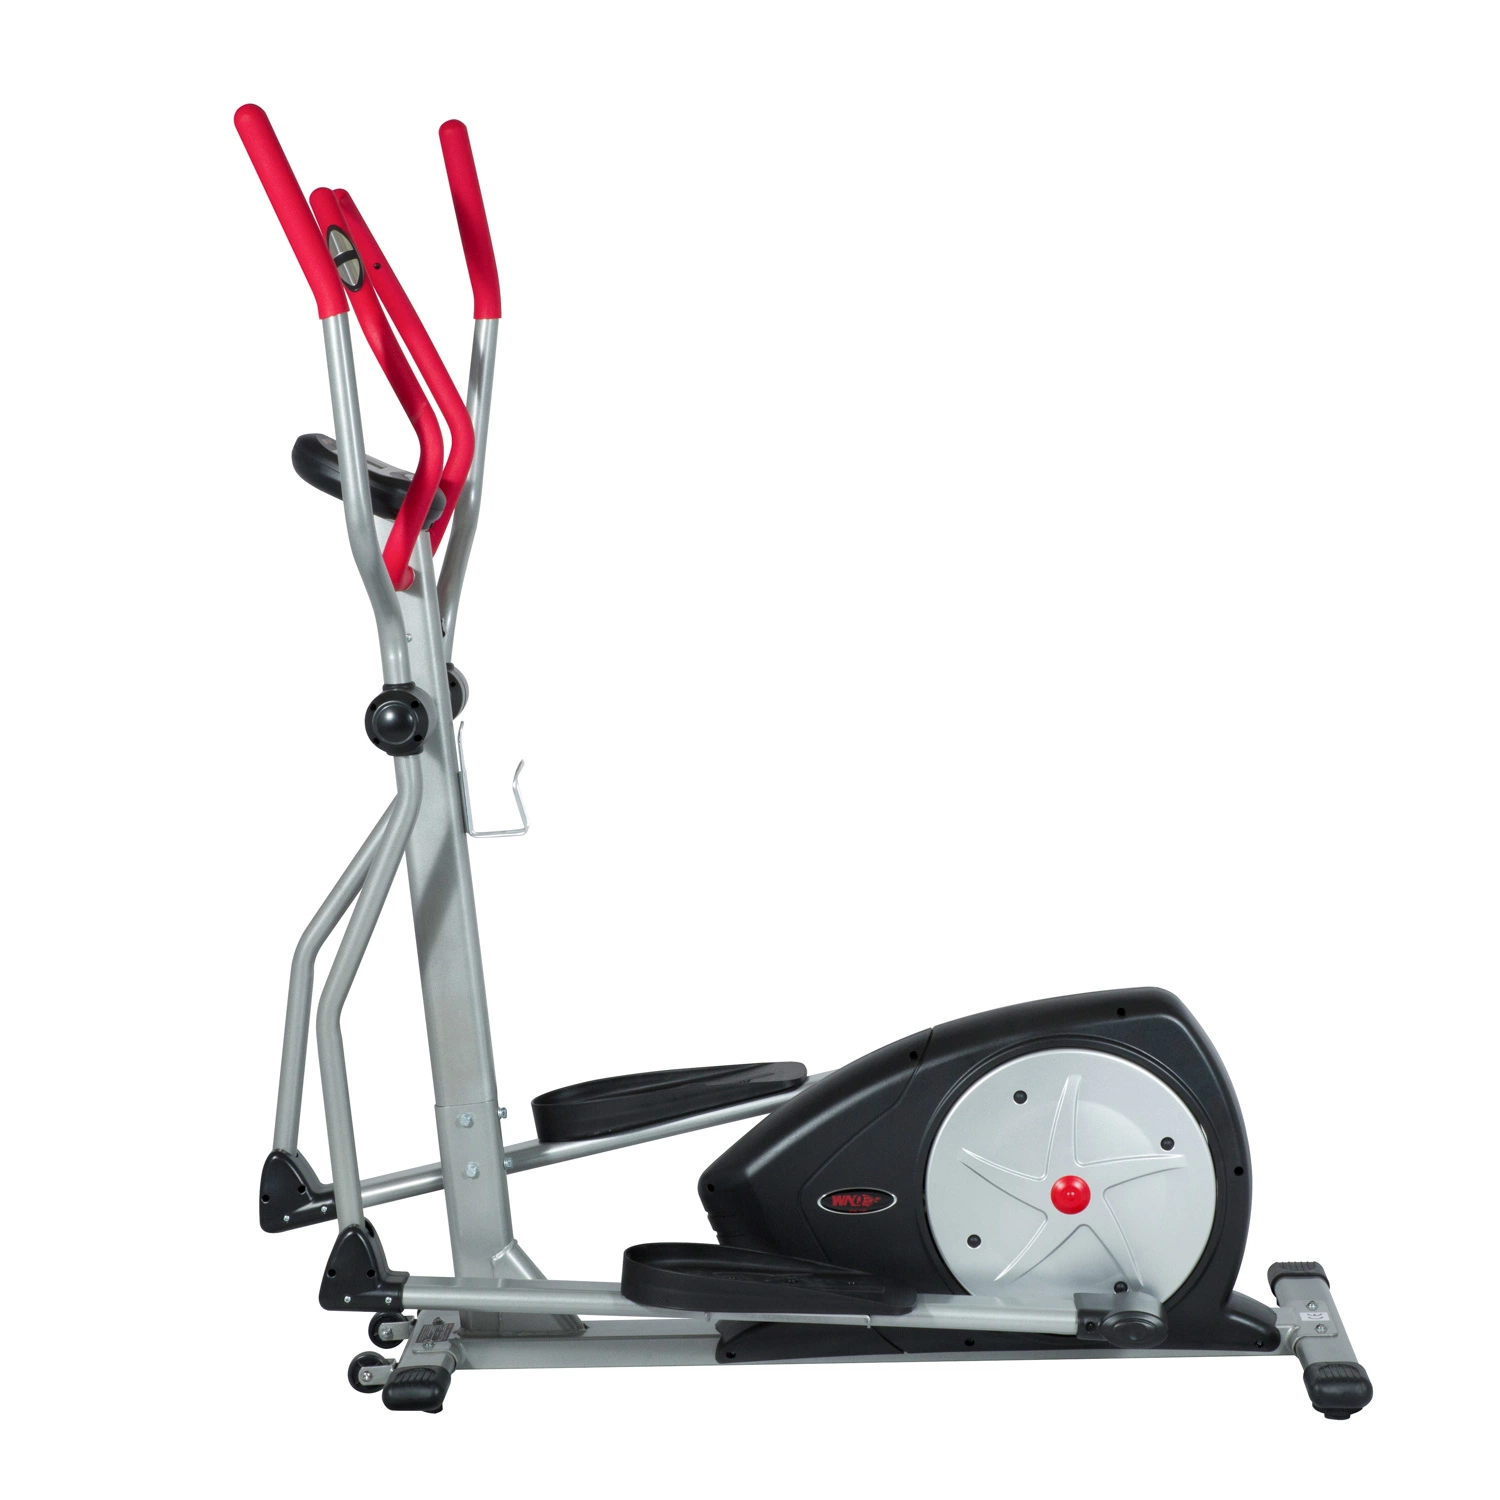 Cardio Equipment Magnetic Trainer Trainer Elliptical Cross Trainer Machine for Home Use